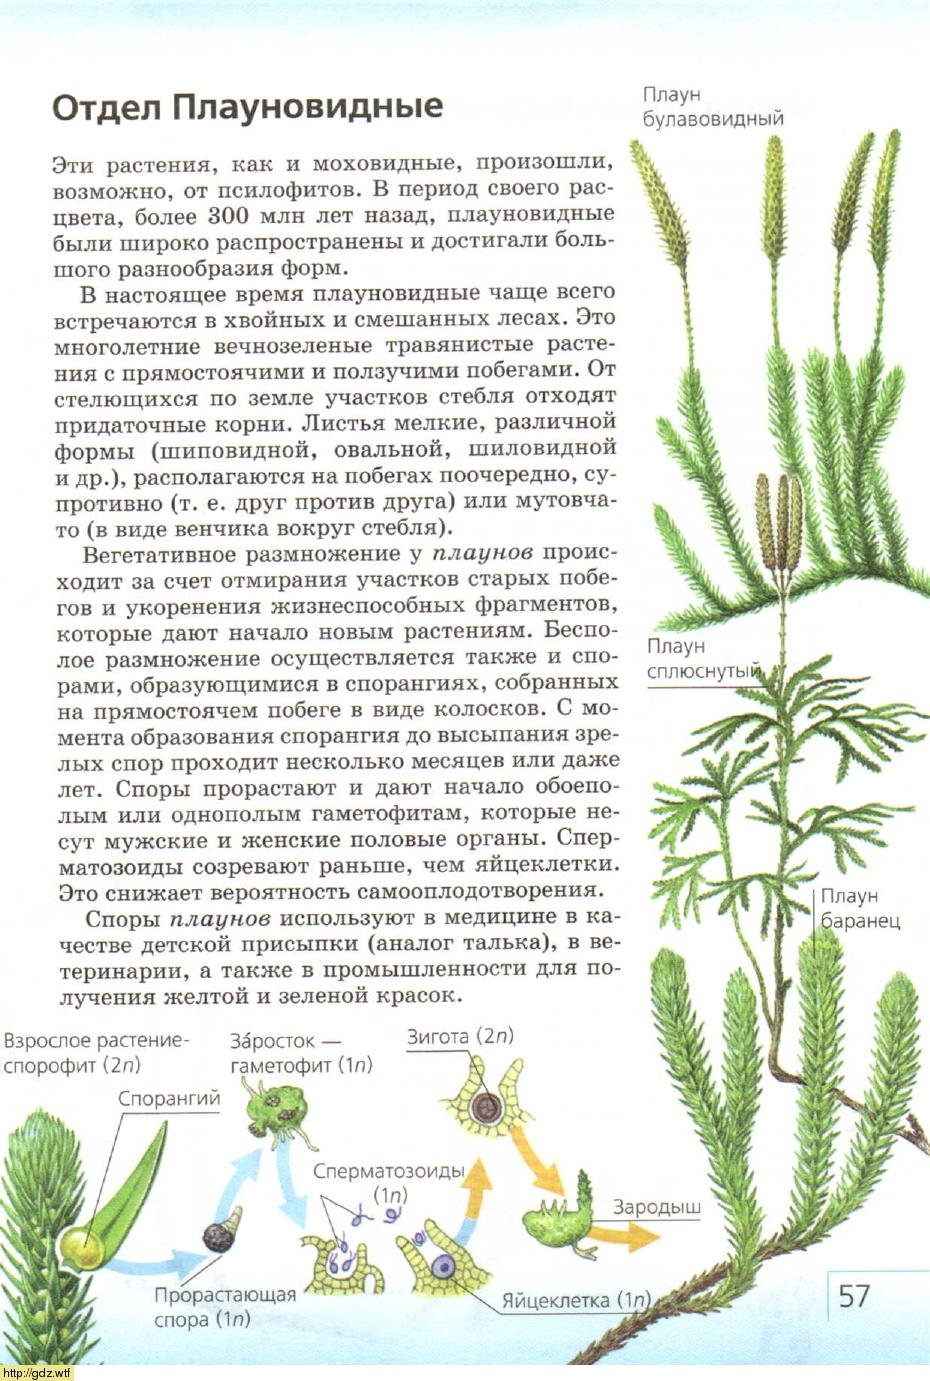 Гаметофит плауновидных растений. Жизненный цикл плауна булавовидного. Цикл развития плауна булавовидного. Заросток плауна булавовидного. Плаун булавовидный схема